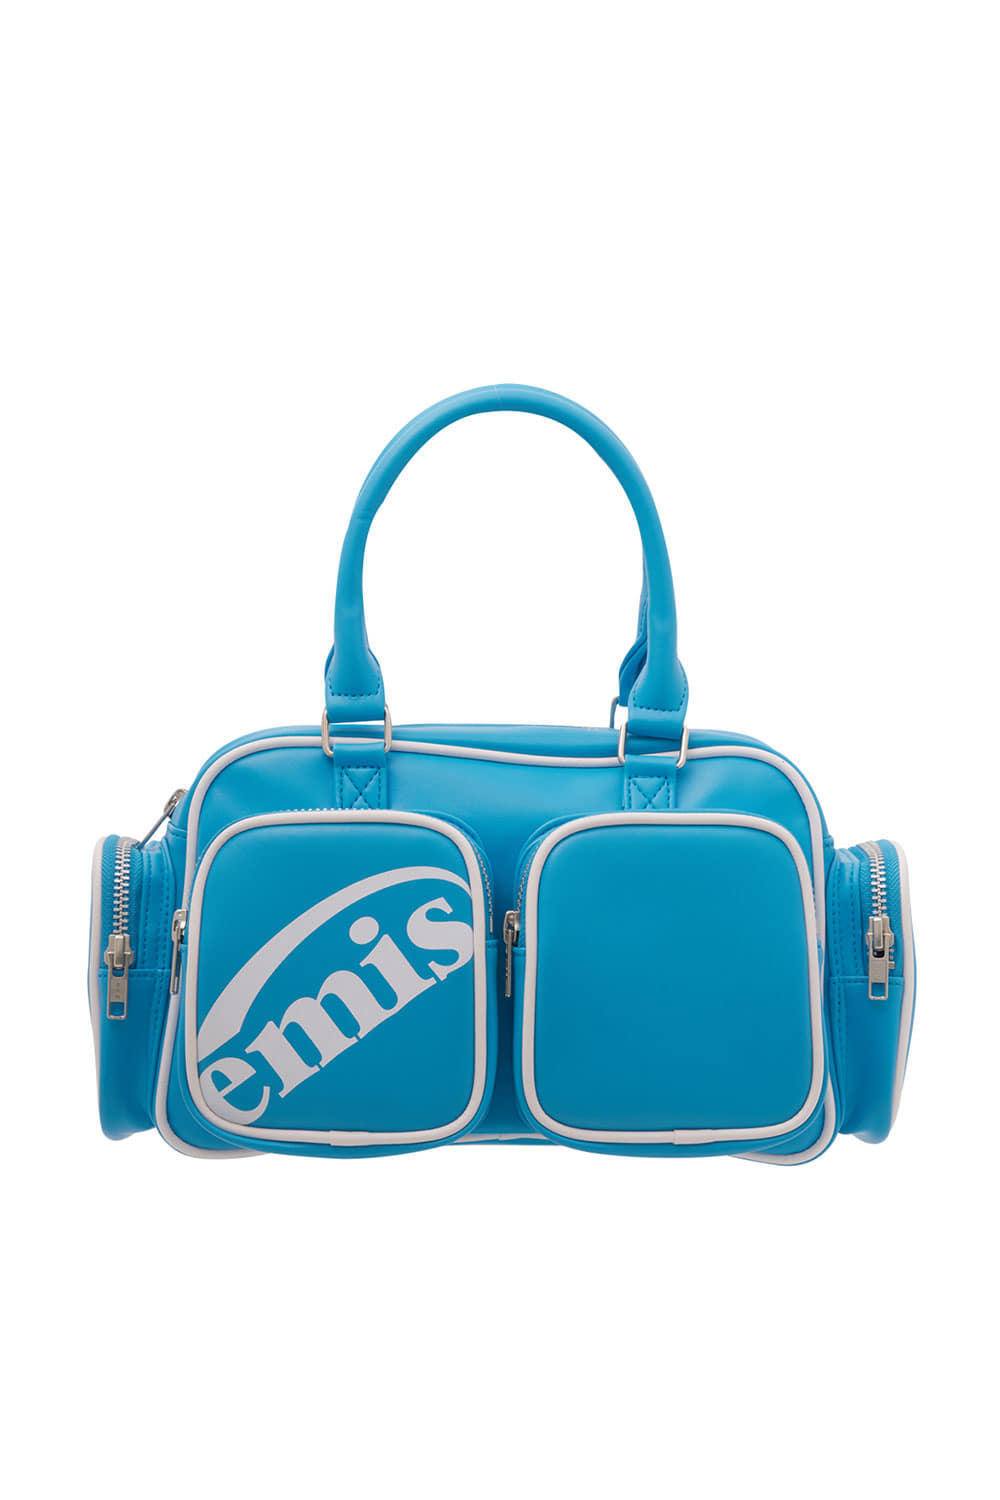 韓國EMIS - CROPPED LOGO MULTI-POCKET BAG-AQUA BLUE 短款LOGO多口袋包-水藍色